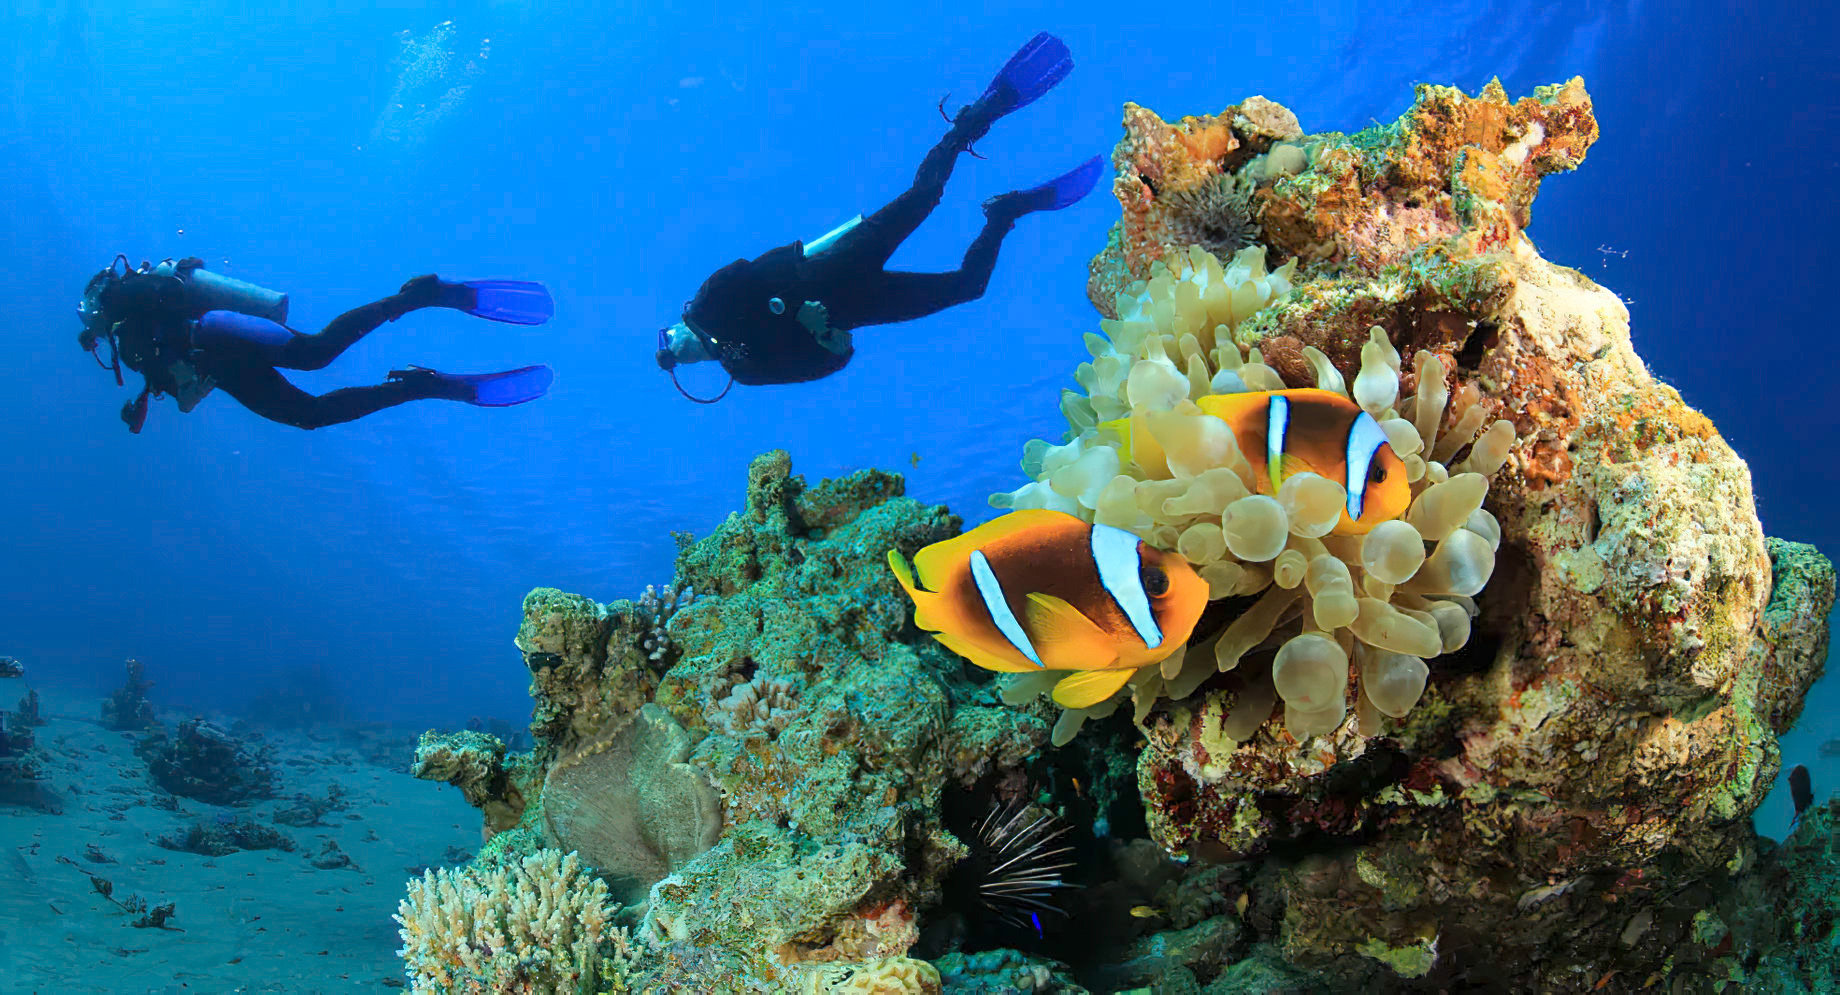 Anantara Veli Maldives Resort – South Male Atoll, Maldives – Scuba Diving